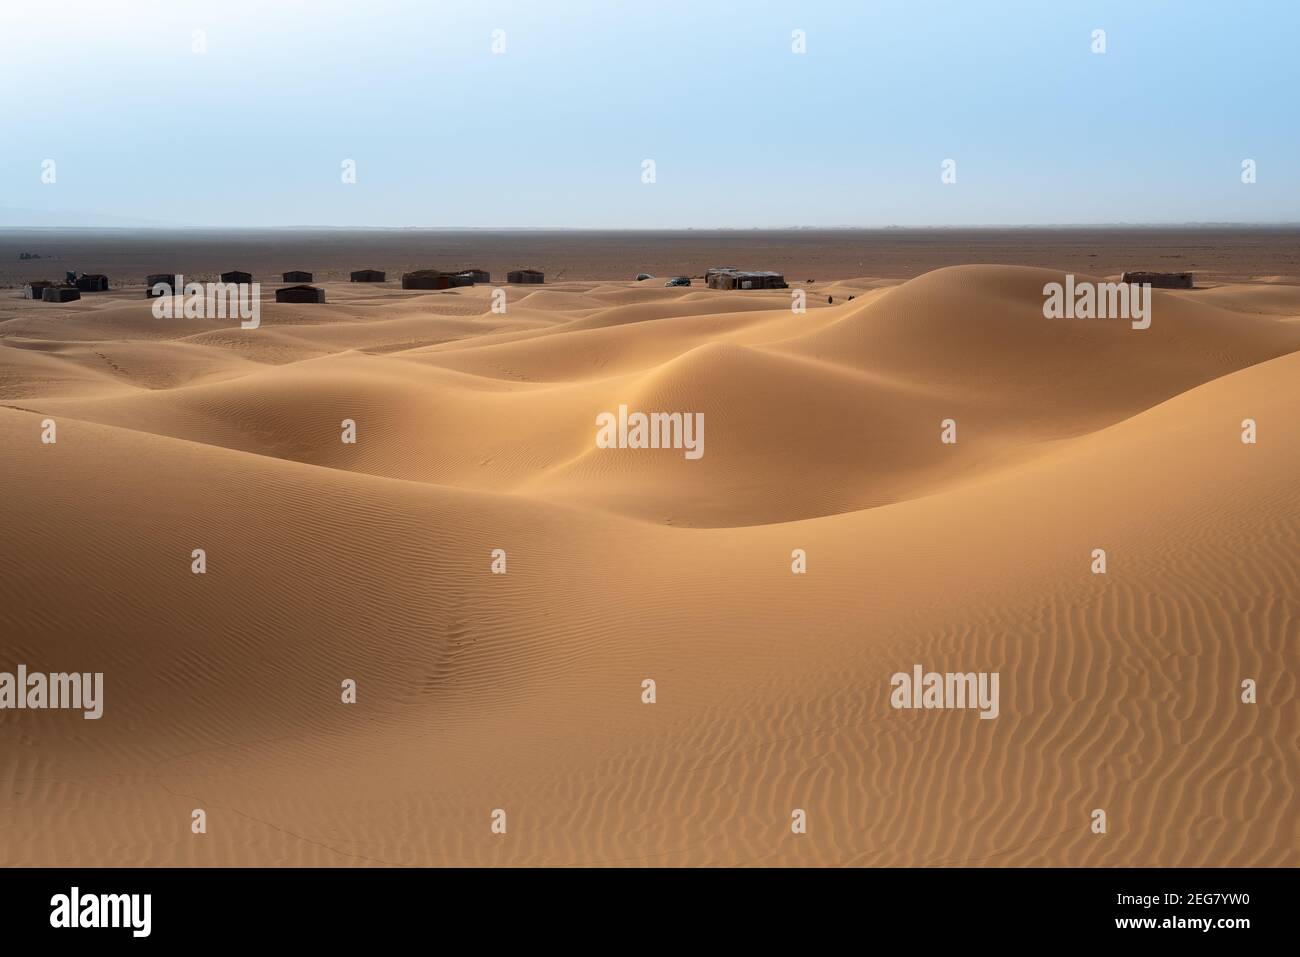 Sand dunes in the Sahara desert, Tagounite, Morocco Stock Photo